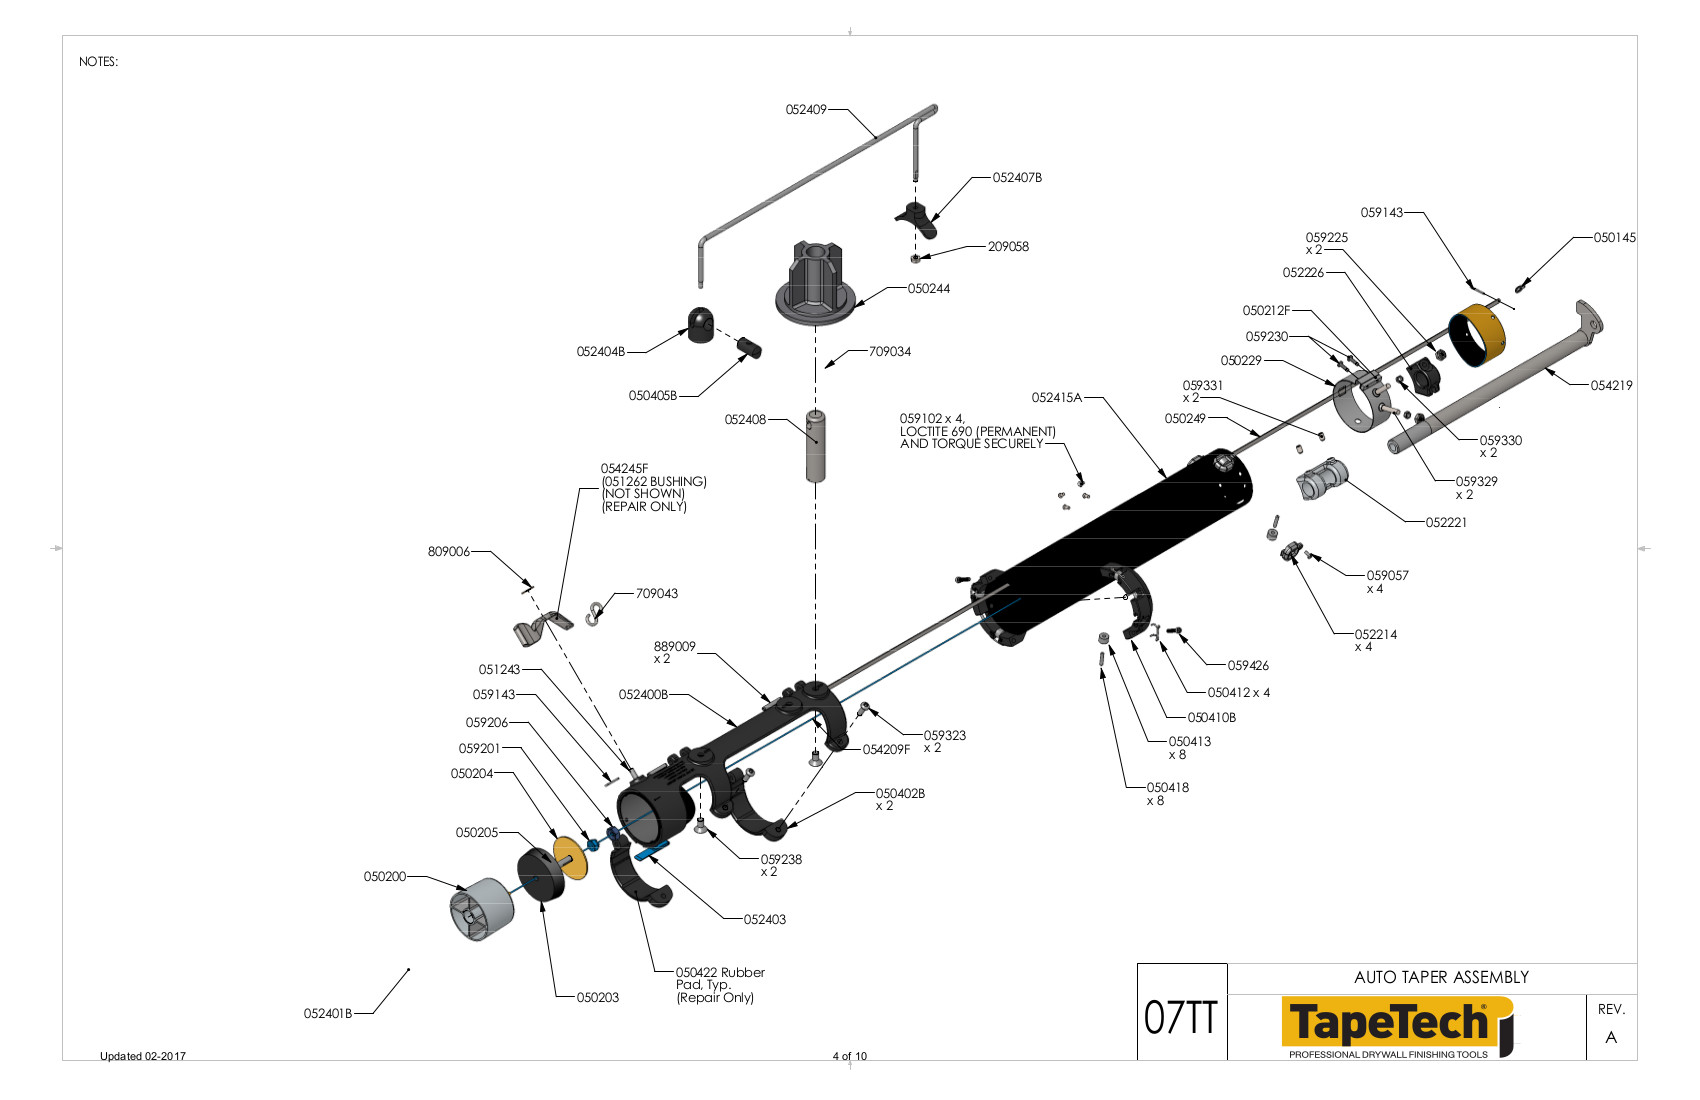 TapeTech® Automatic Taper Body Schematic (07TT)